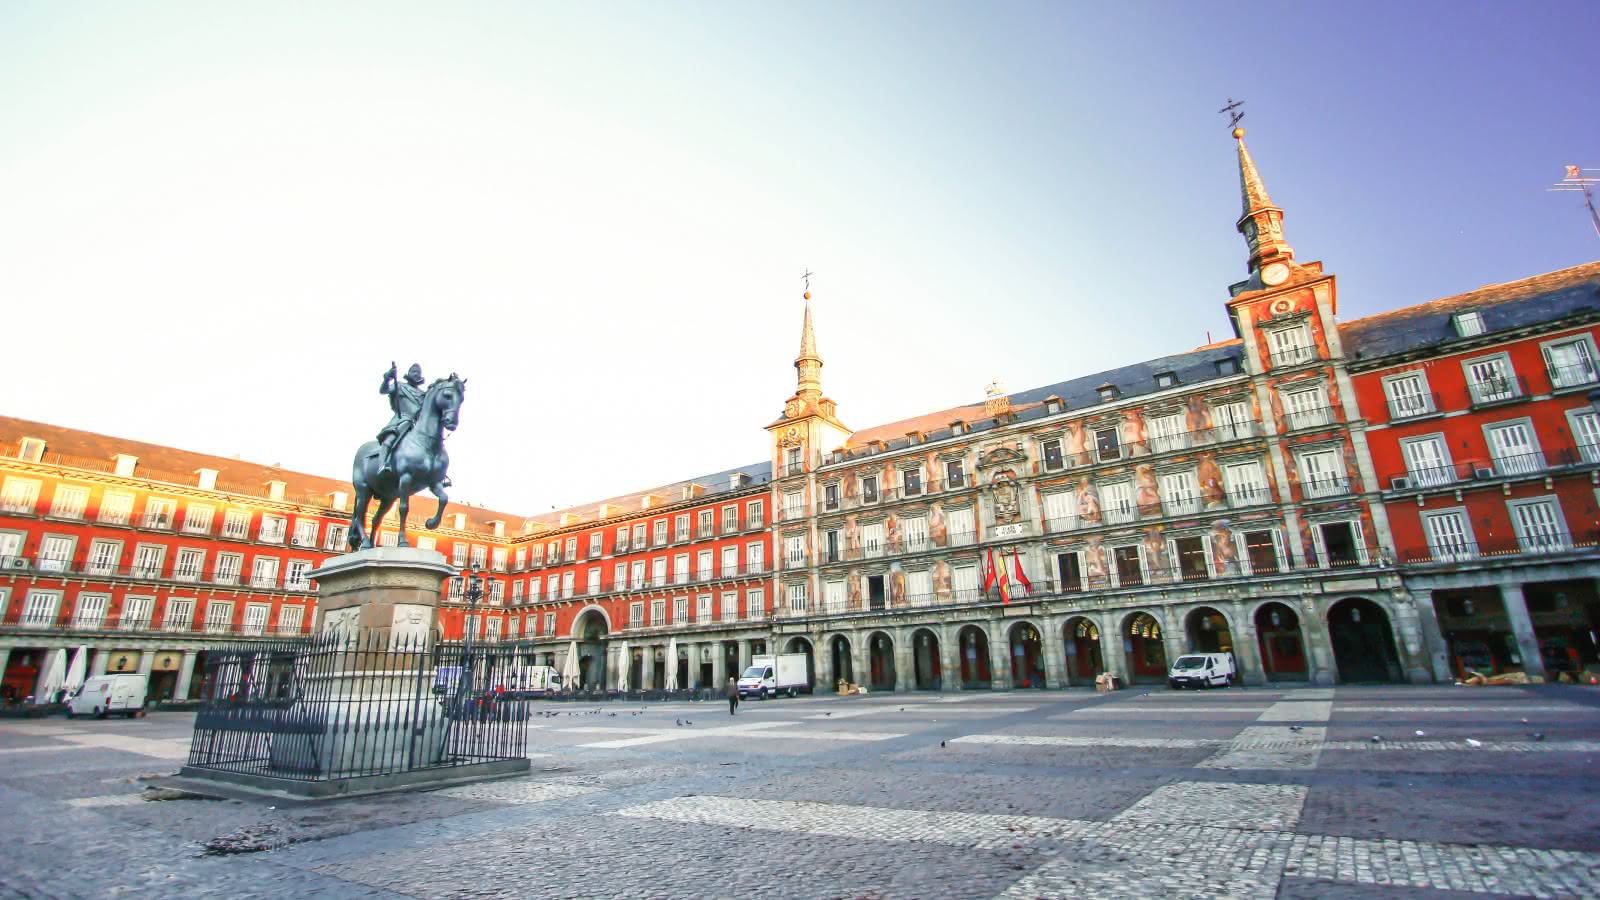 Madrid Virtual Tour - Spanish Inquisition, Puerta del Sol, Plaza Mayor